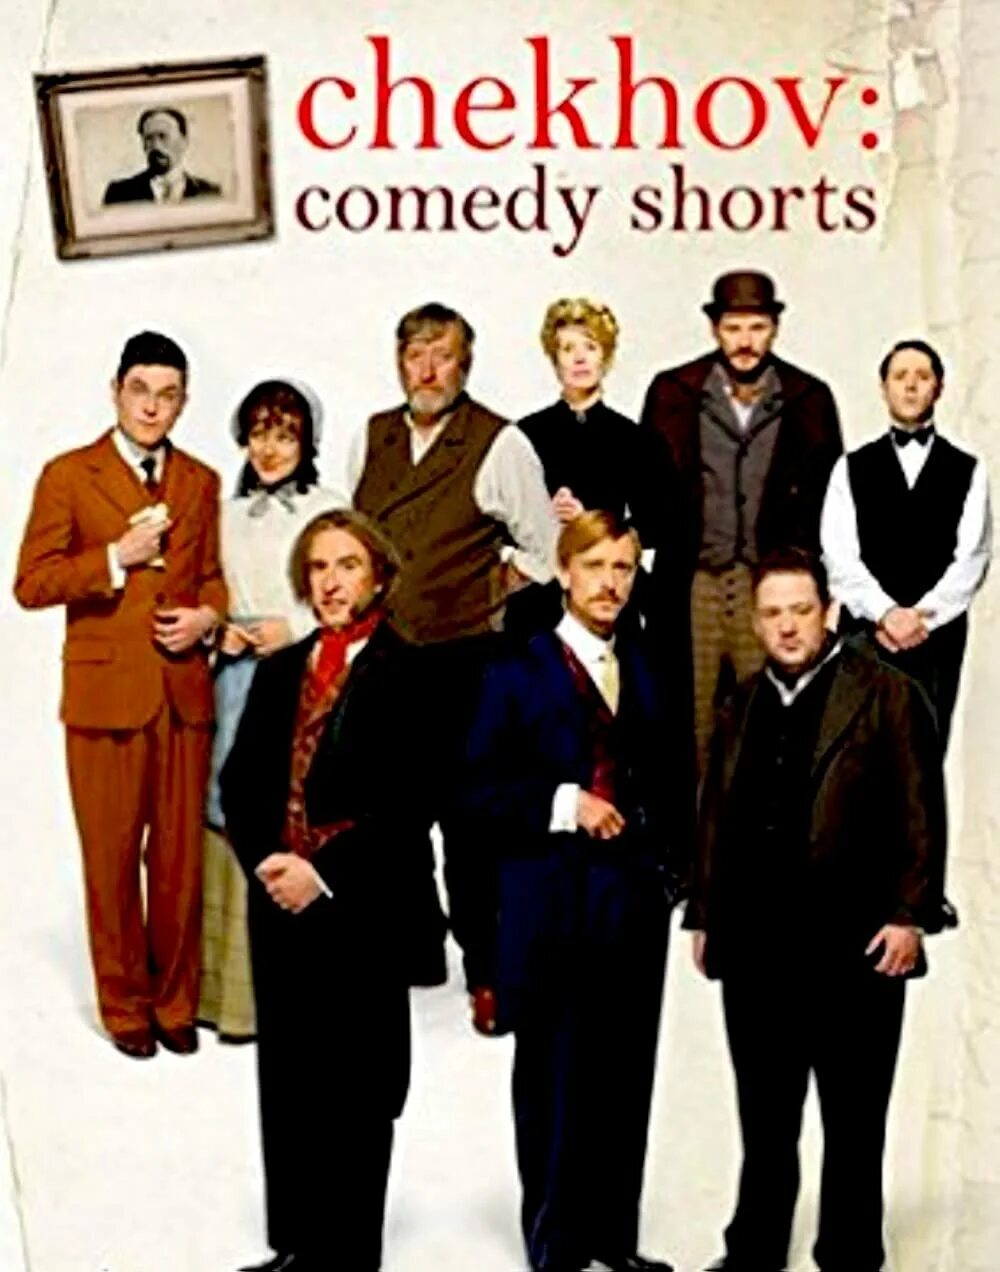 Comedy shorts. The Bear TV Series.